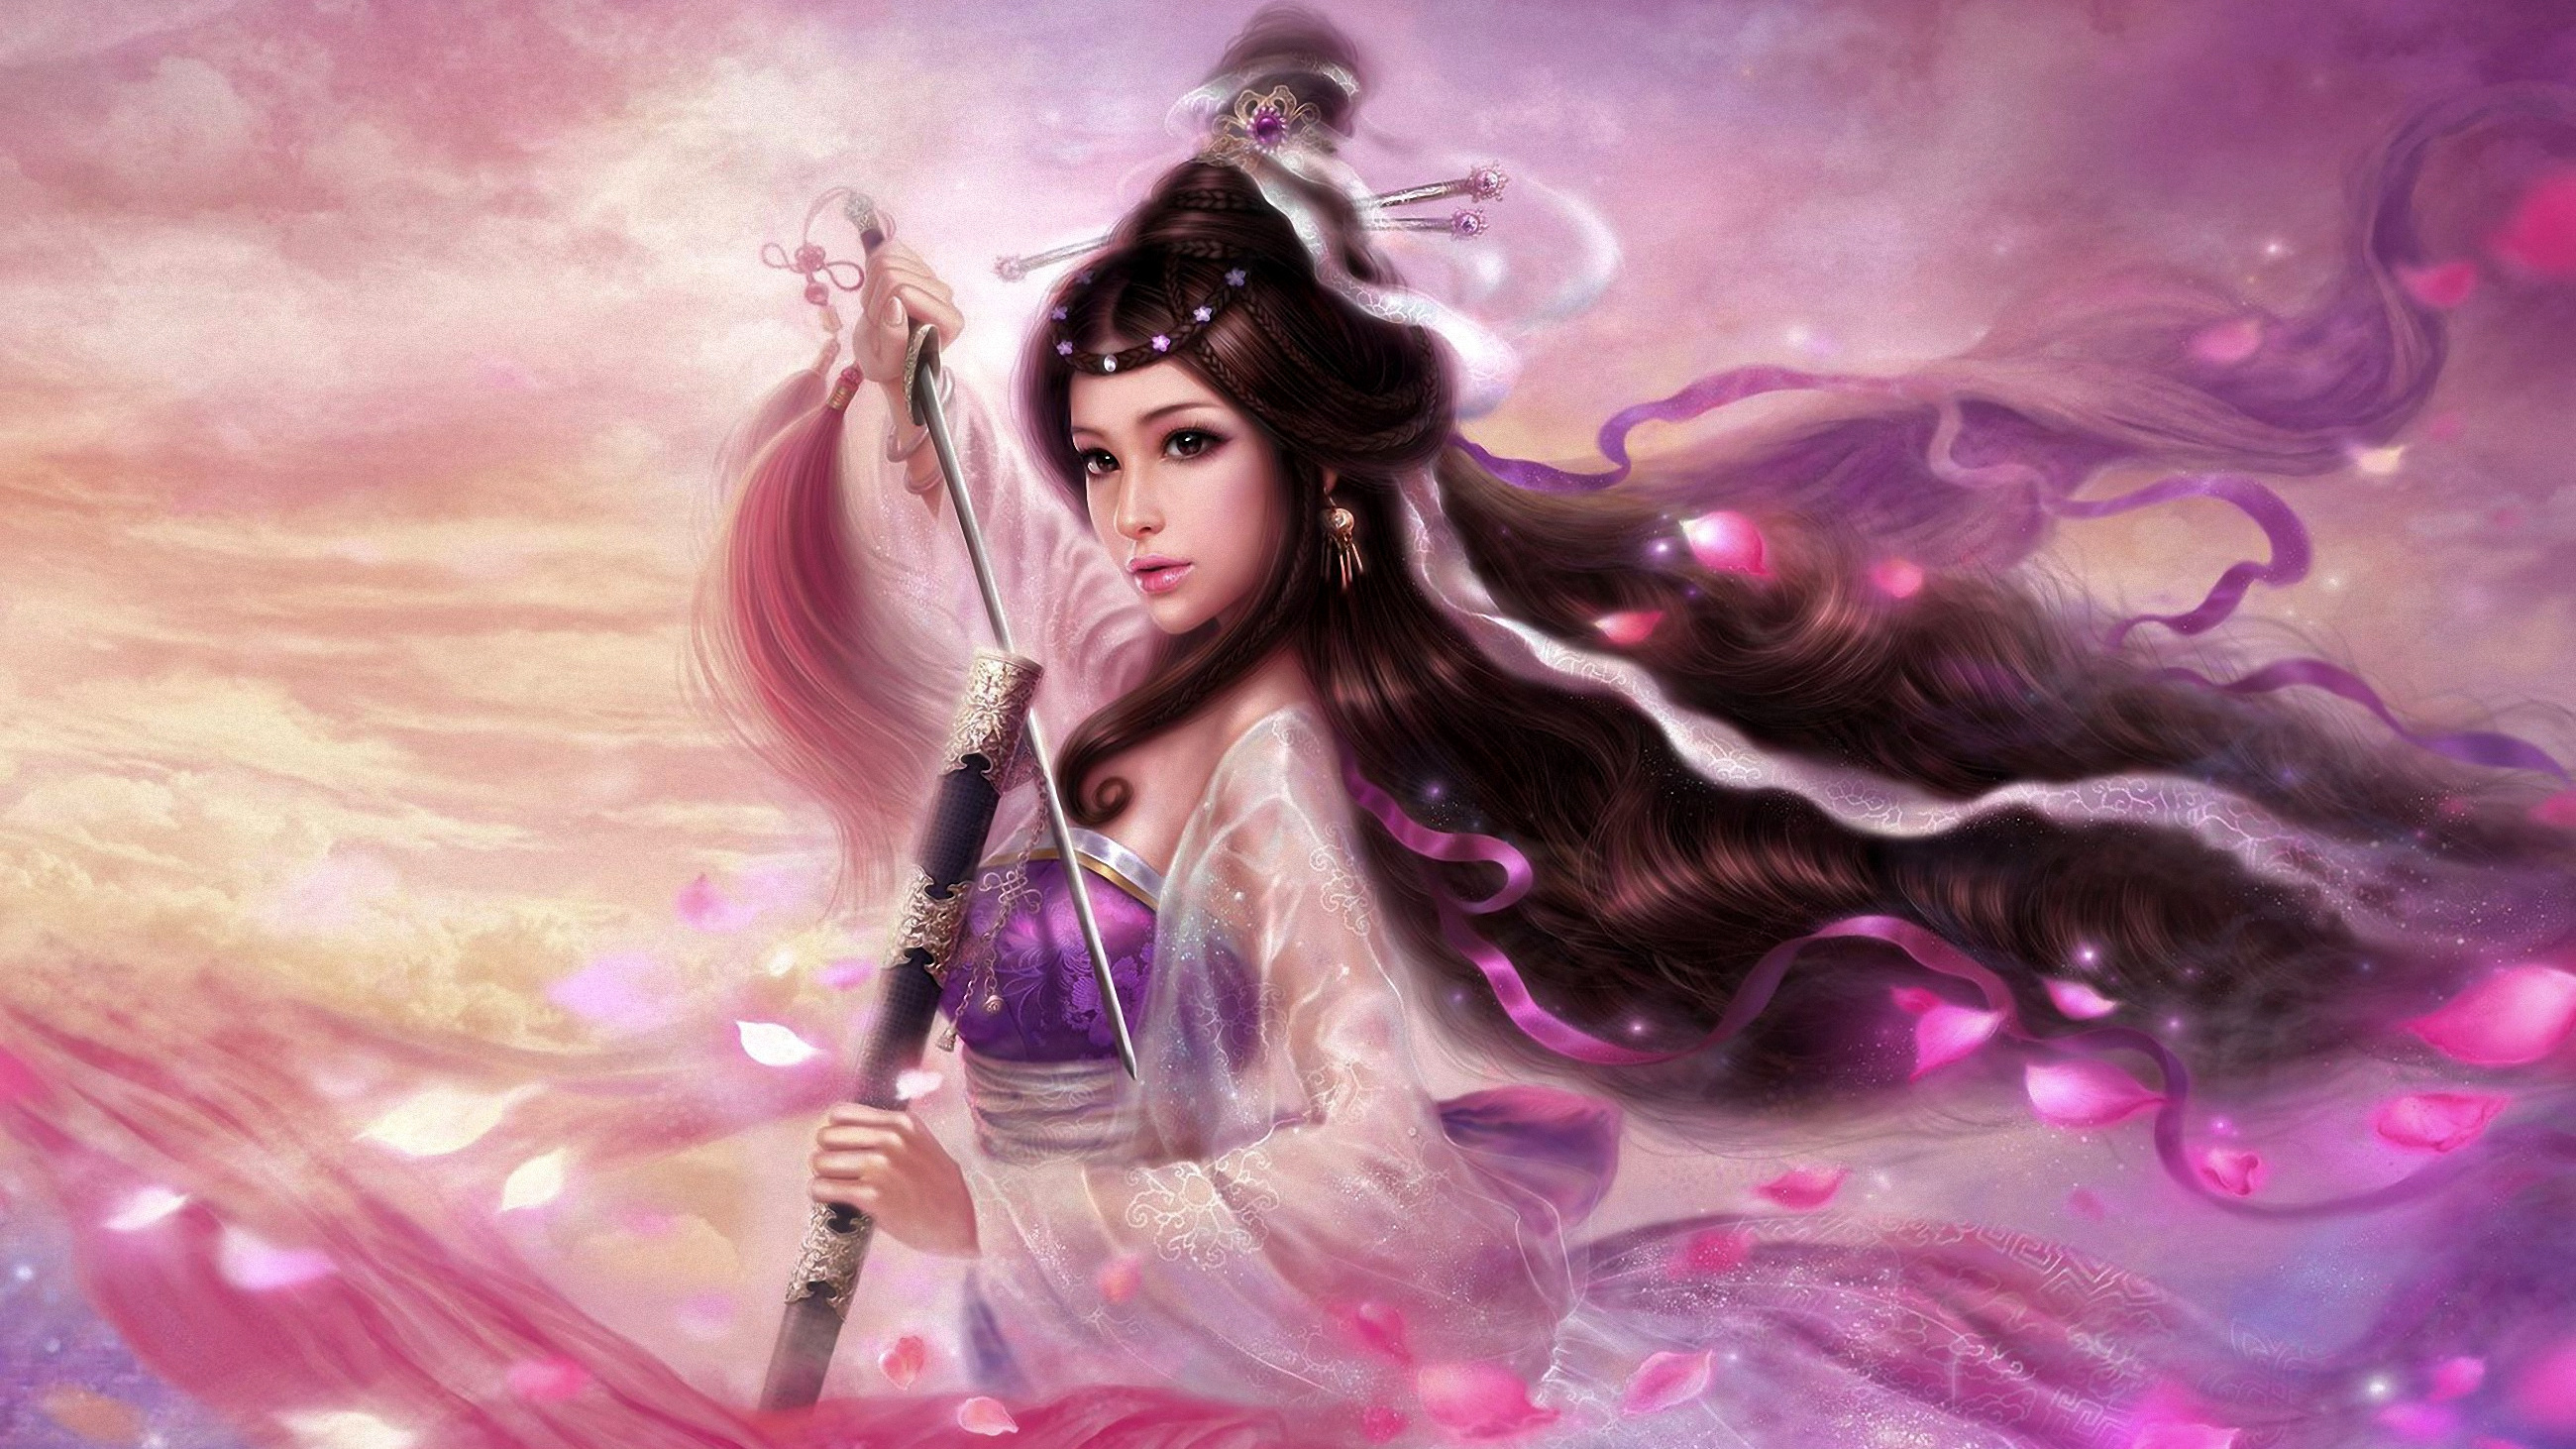 Women Warrior Long Hair Fantasy Girl
 Wallpapers